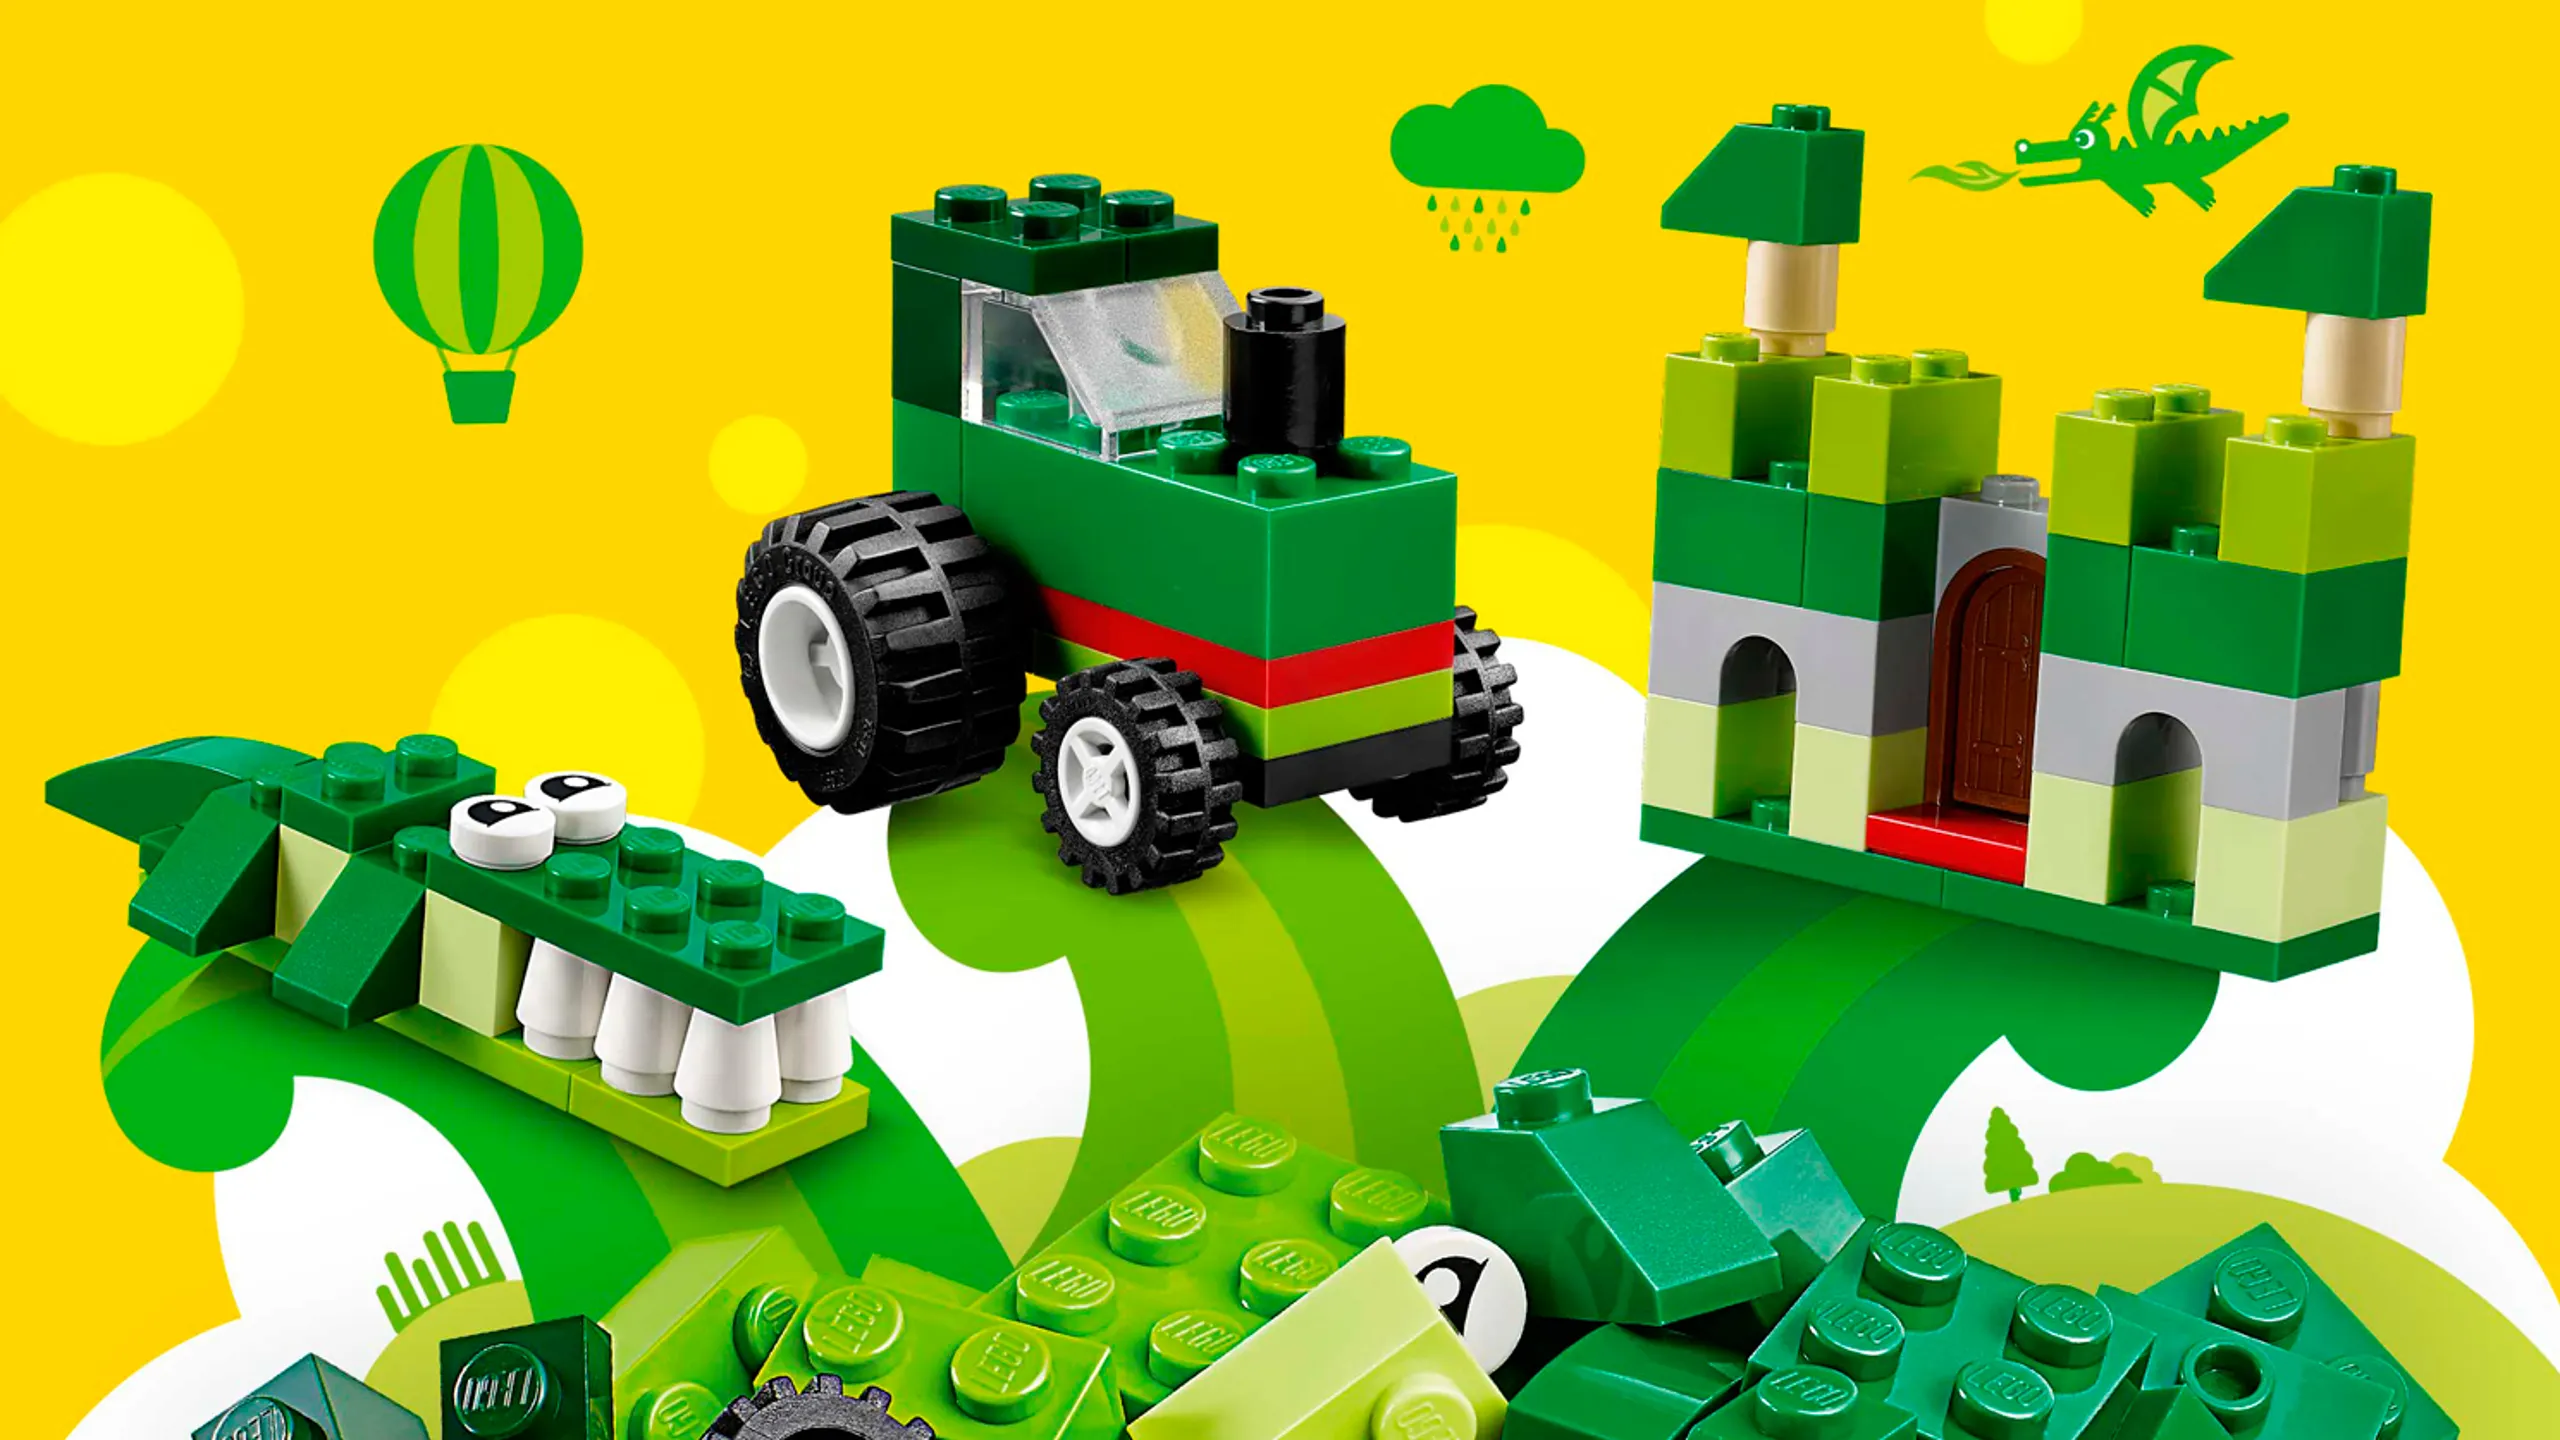 LEGO Classic Green Creativity Box - 10708 - Use green bricks to build a crocodile, a tractor or a castle!